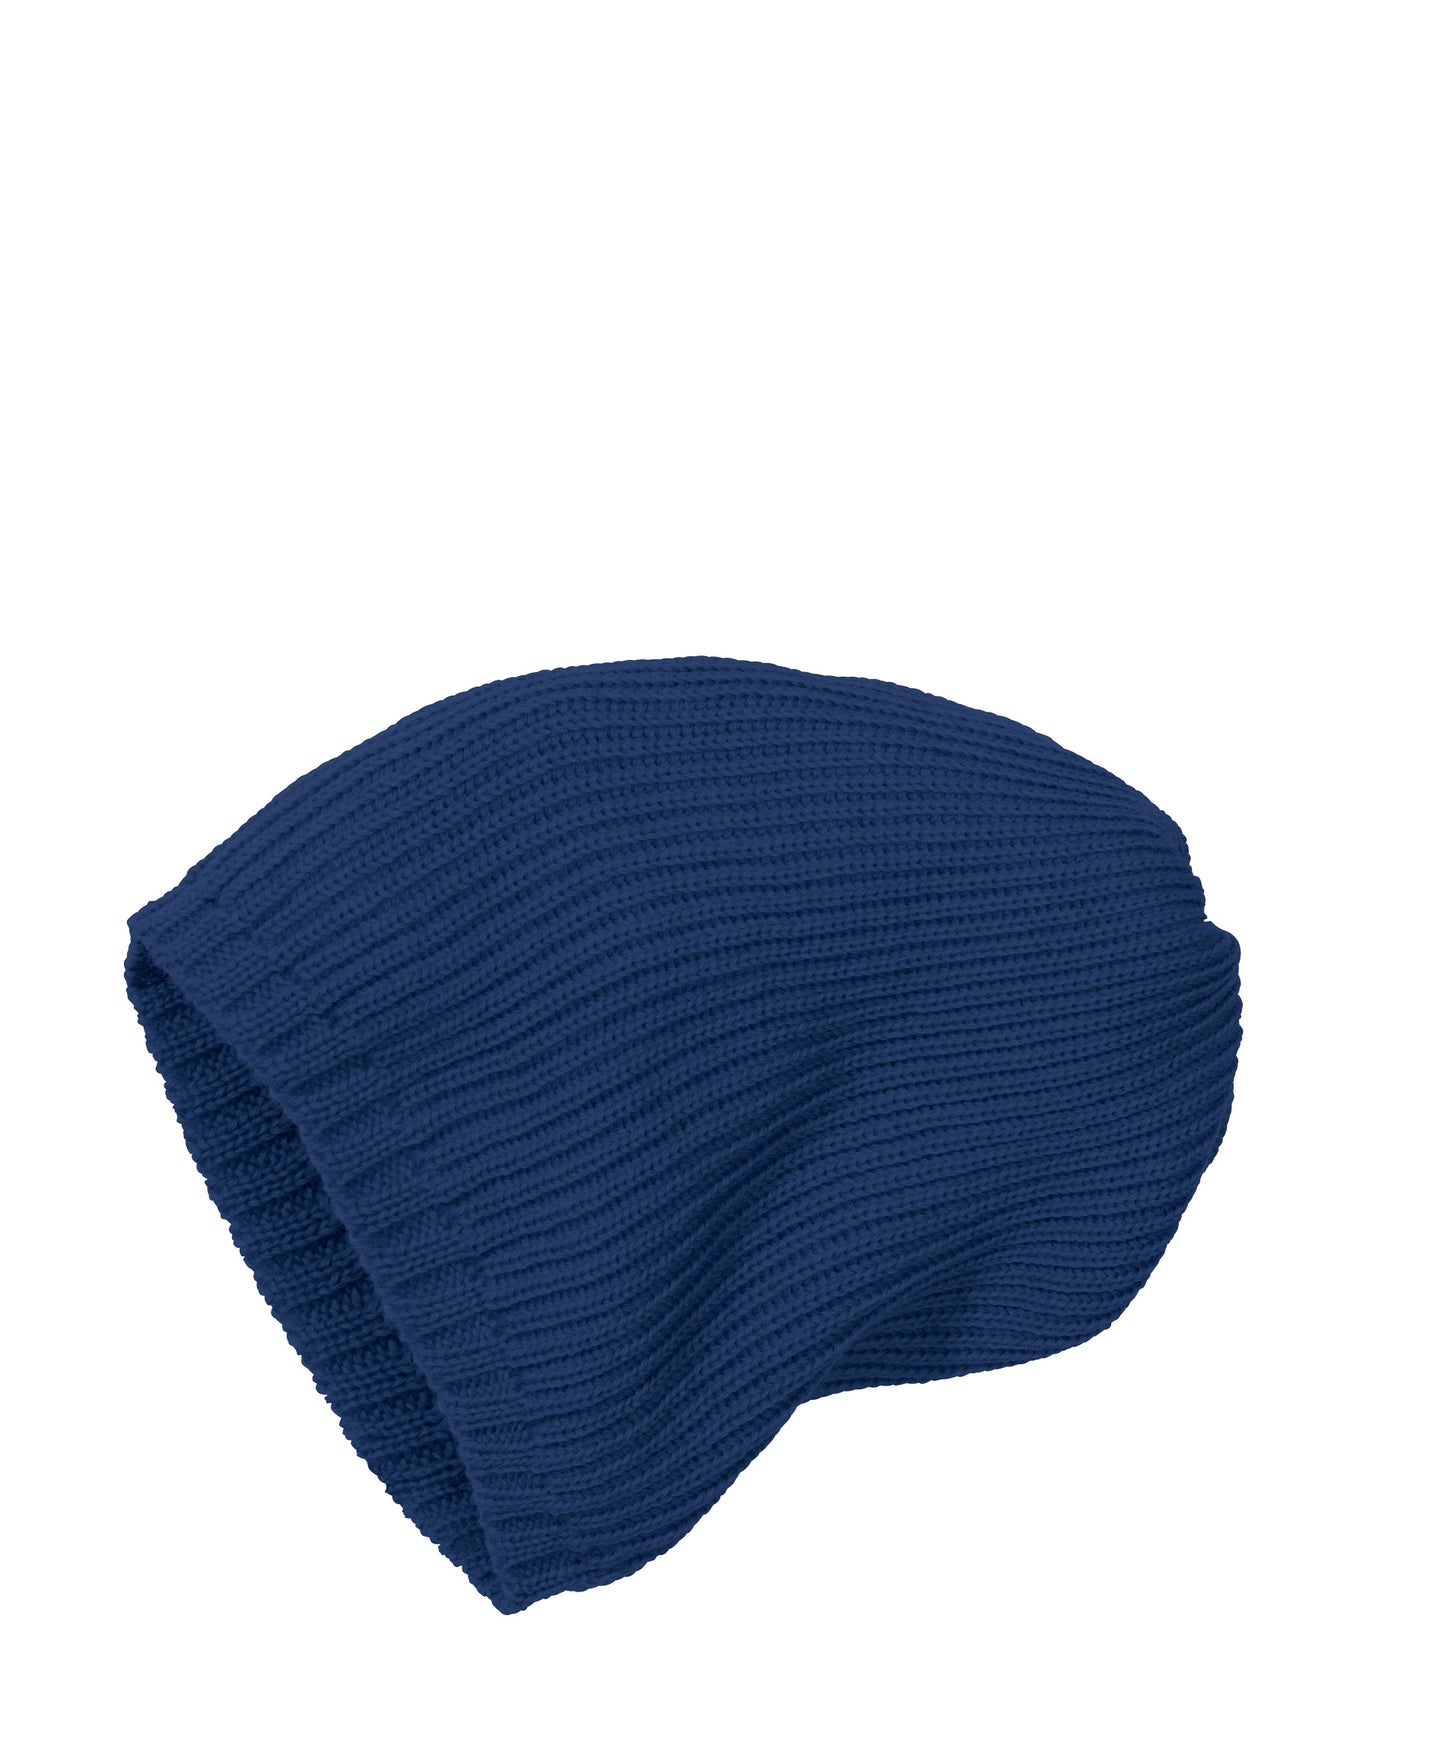 Disana Toddler/Child/Adult Knitted Hat, Merino Wool